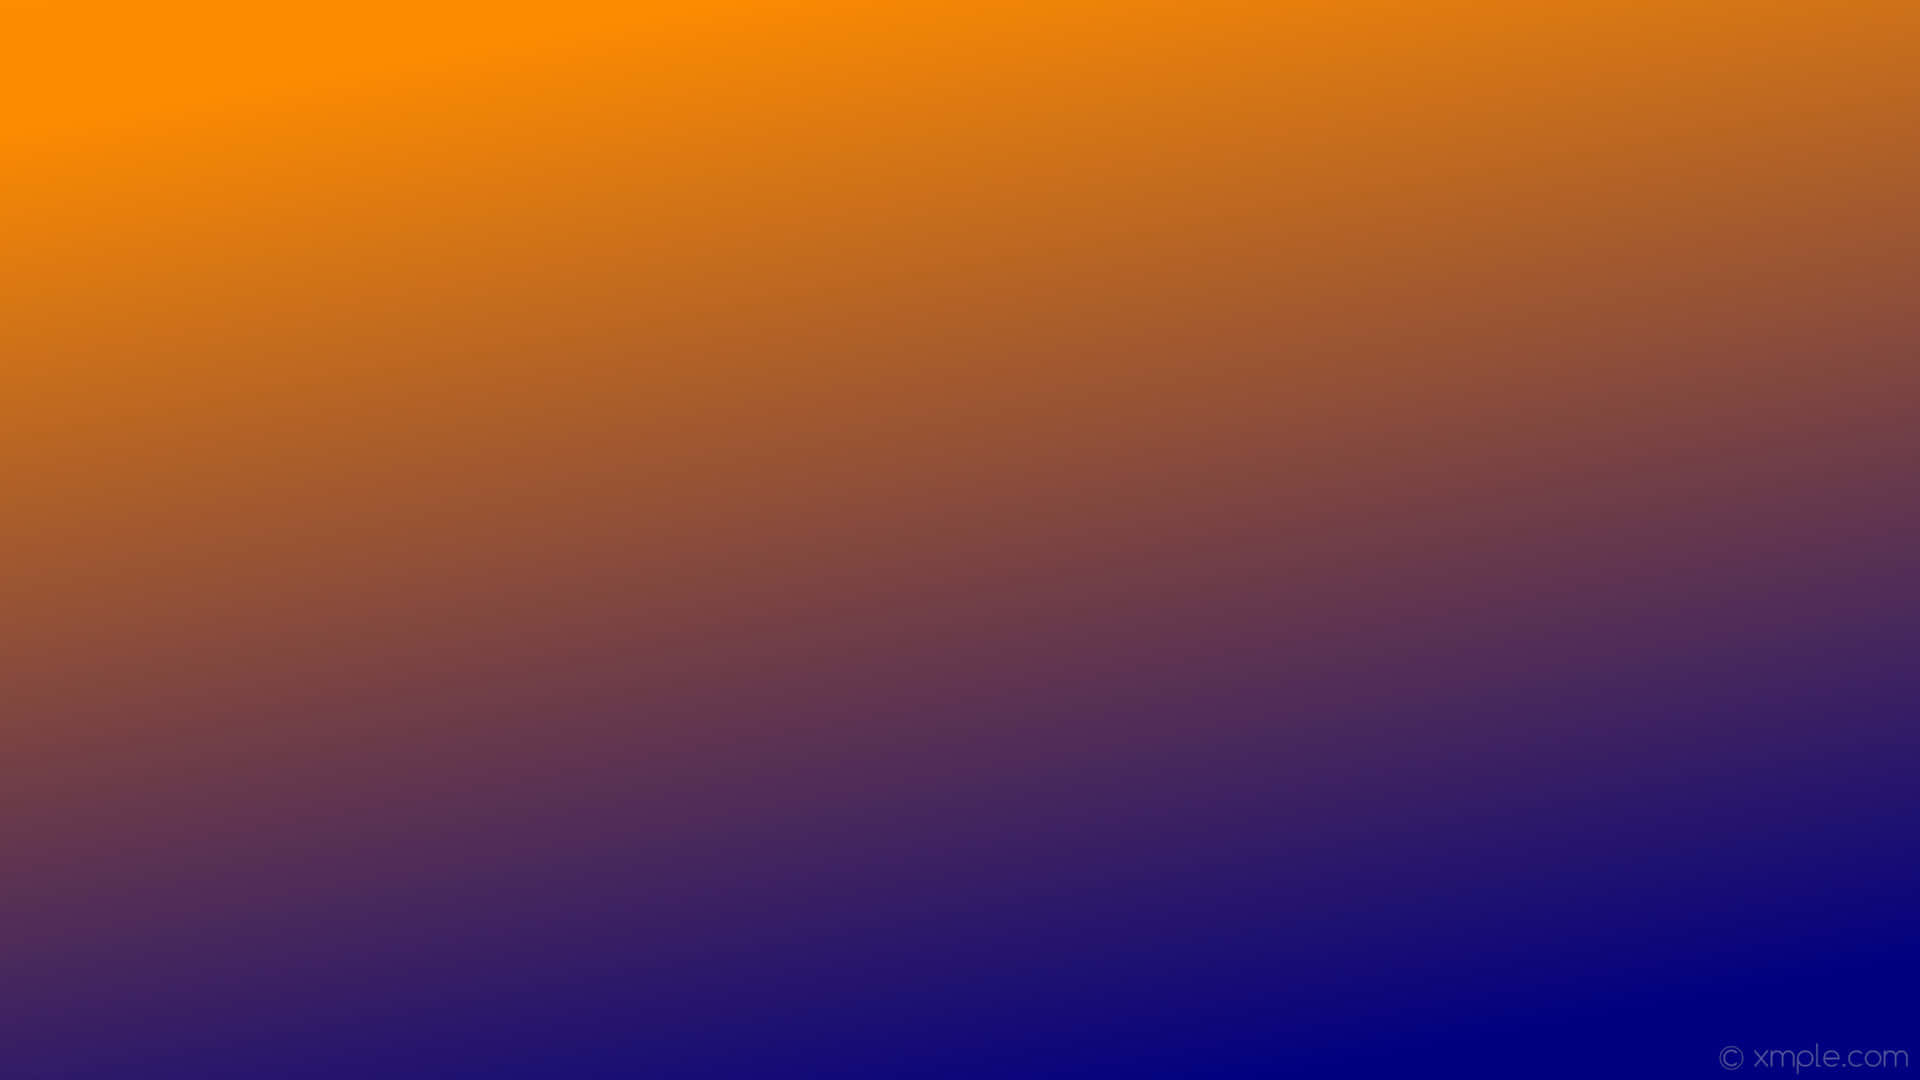 Unosfondo Arancione E Blu Con Un Gradiente